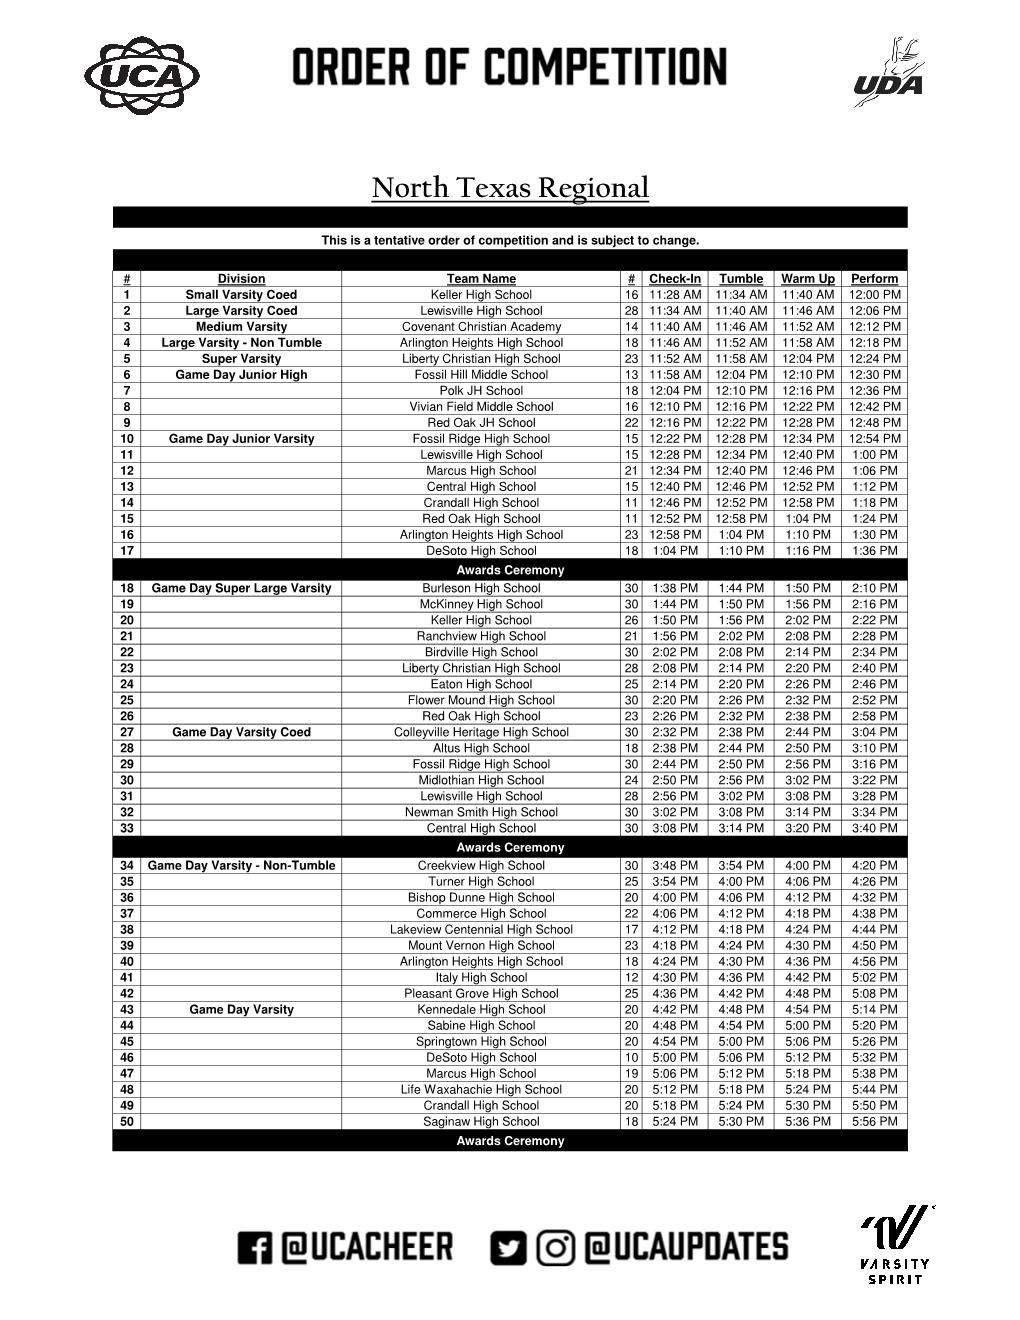 North Texas Regional Performance Order.Xlsx